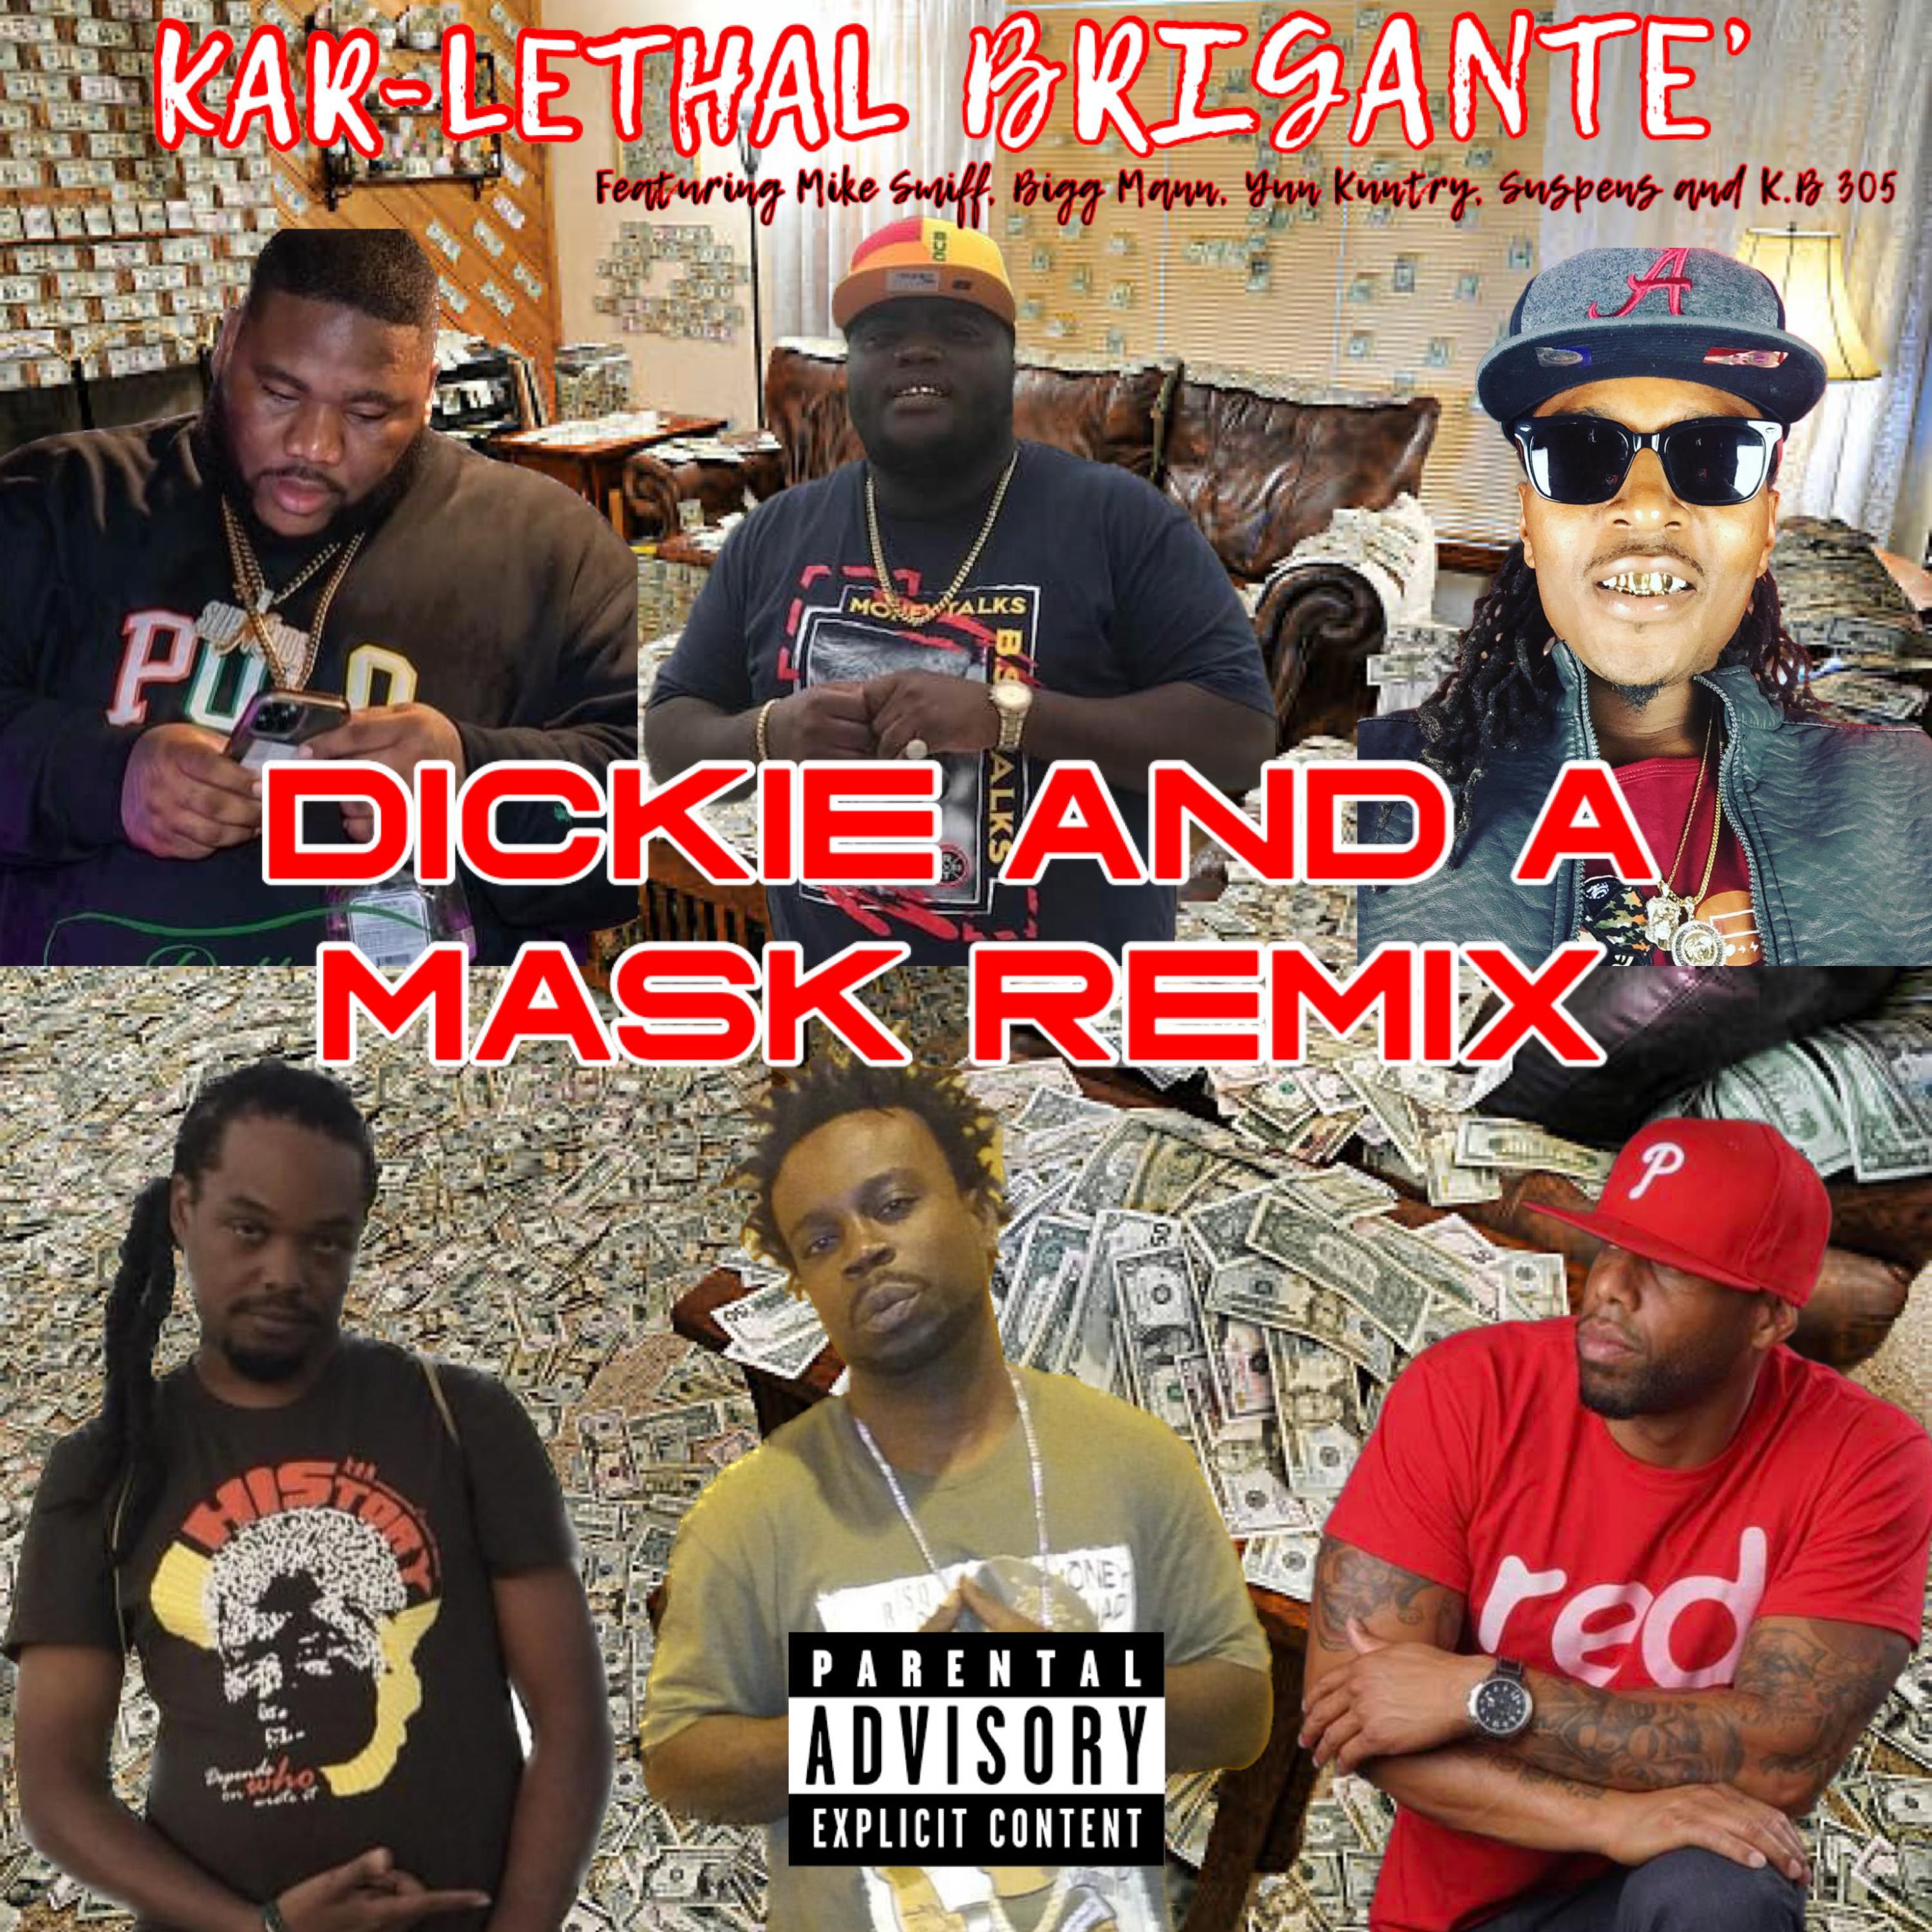 Kar-Lethal Brigante' - Dickie and A Mask (feat. Mike Smiff, Suspens, Yun Kuntry, K.B B.O.B GANG & Bigg Mann) (Remix)